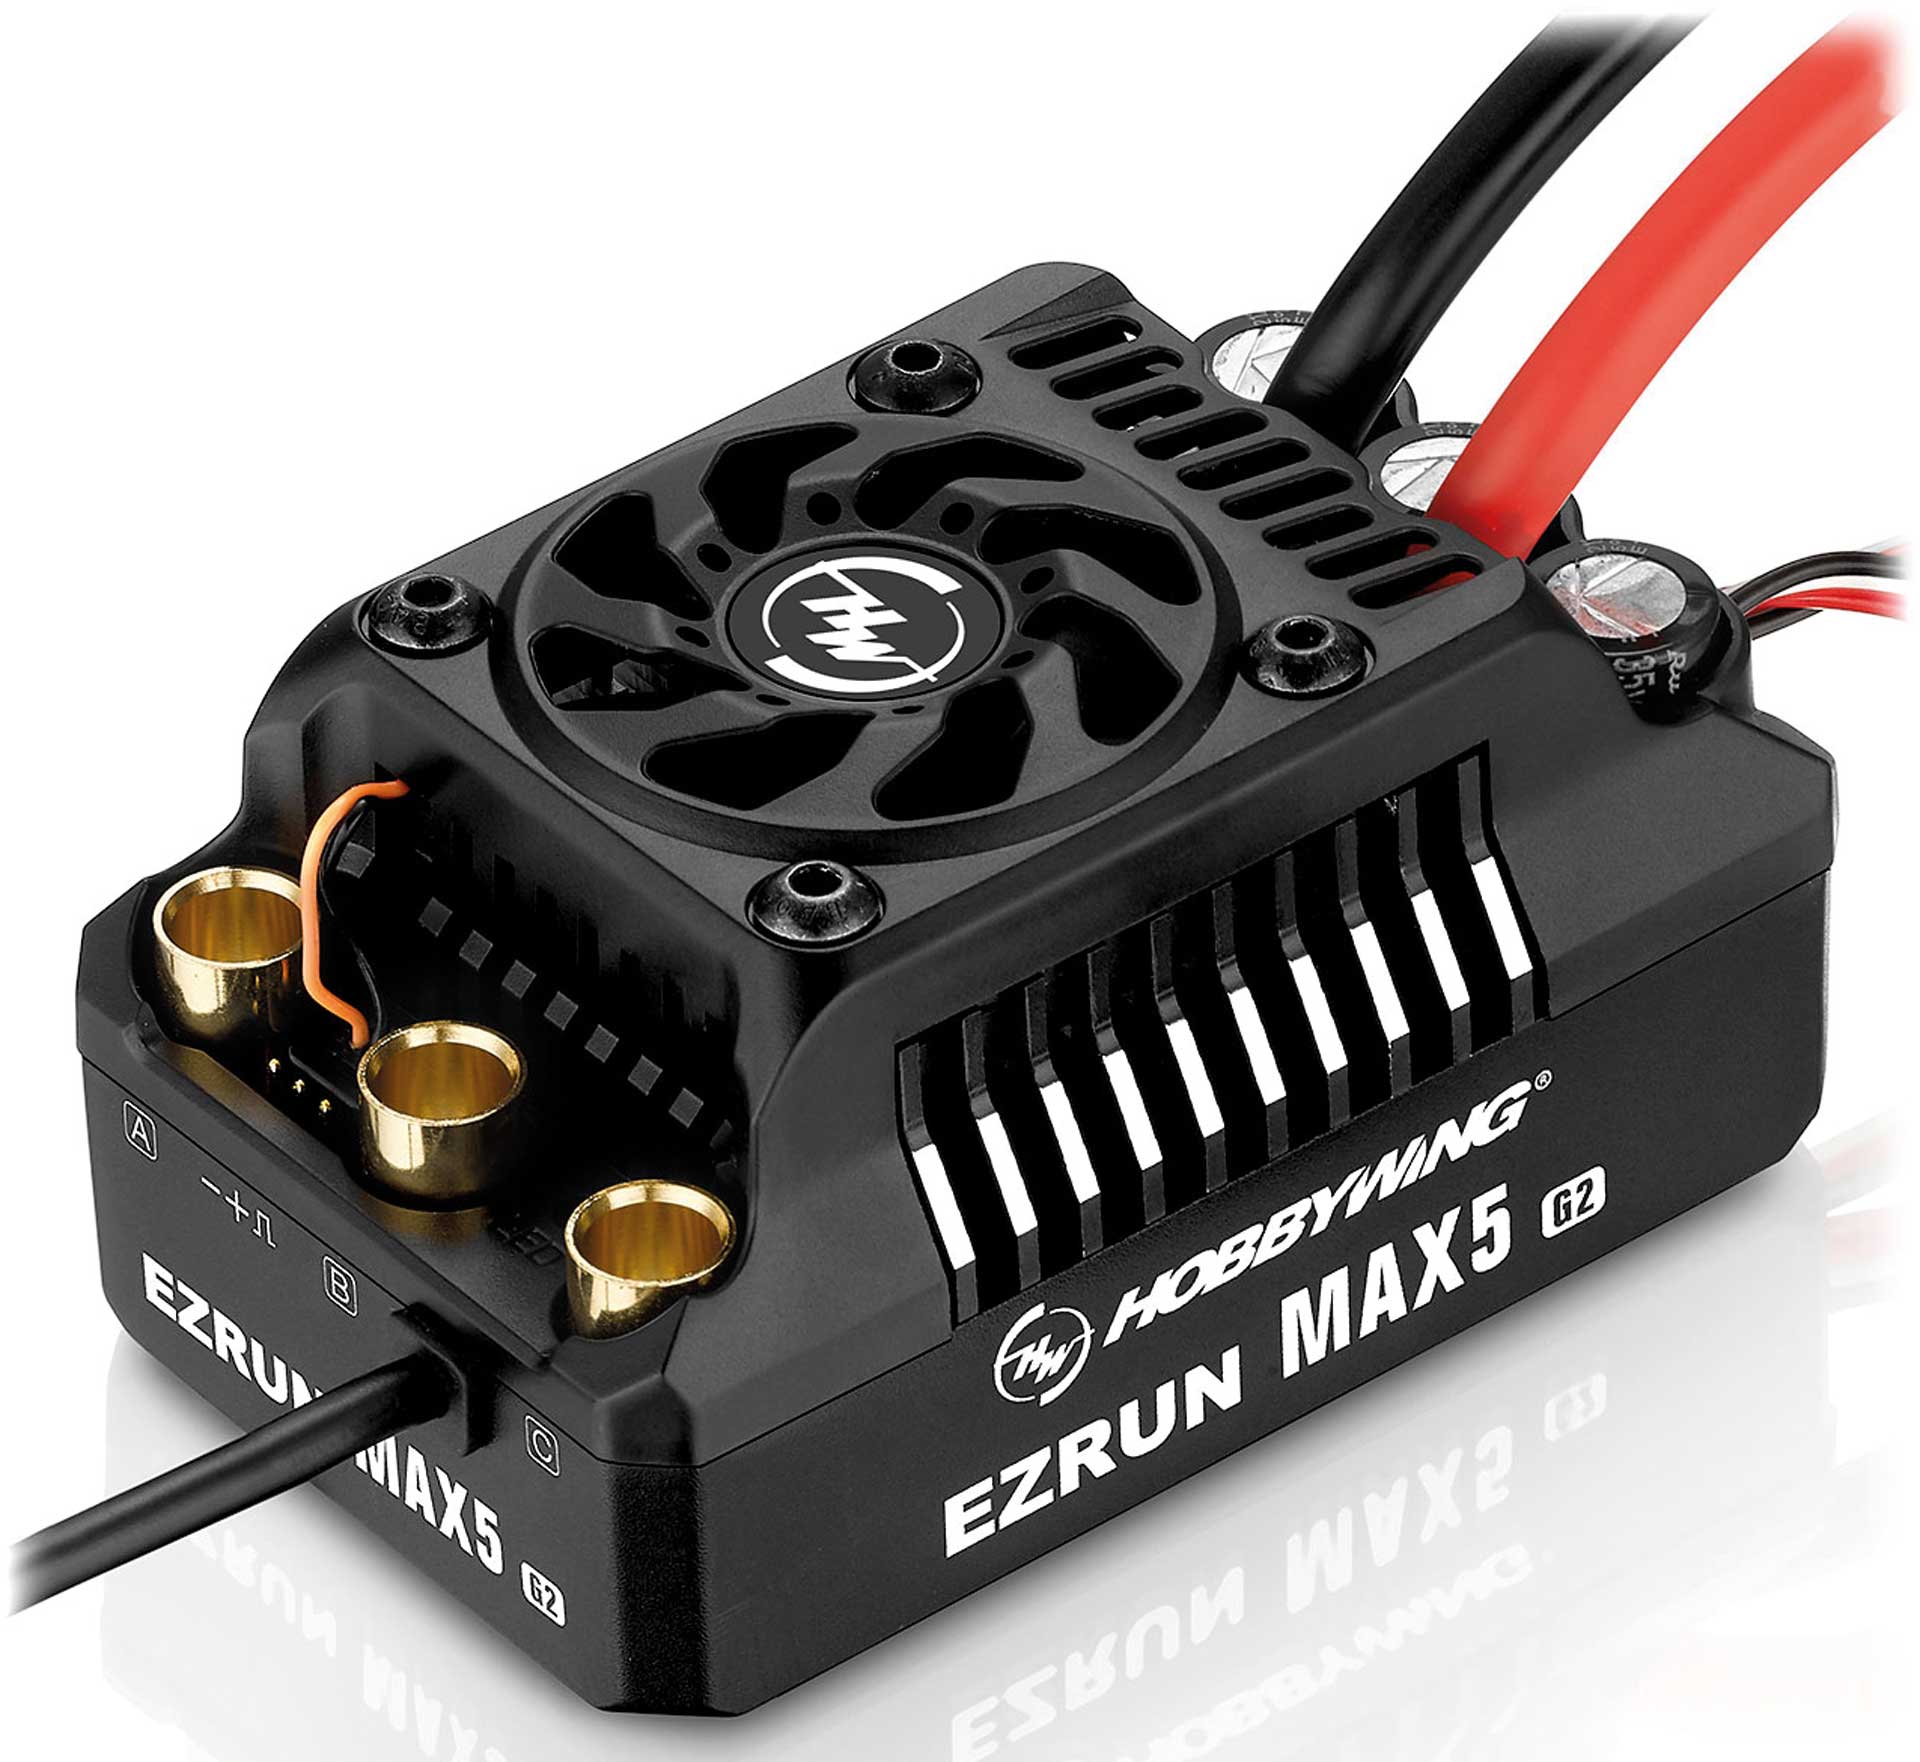 HOBBYWING Ezrun MAX5 HV G2 controller Sensorless 250 Amp, 6-12s LiPo, BEC